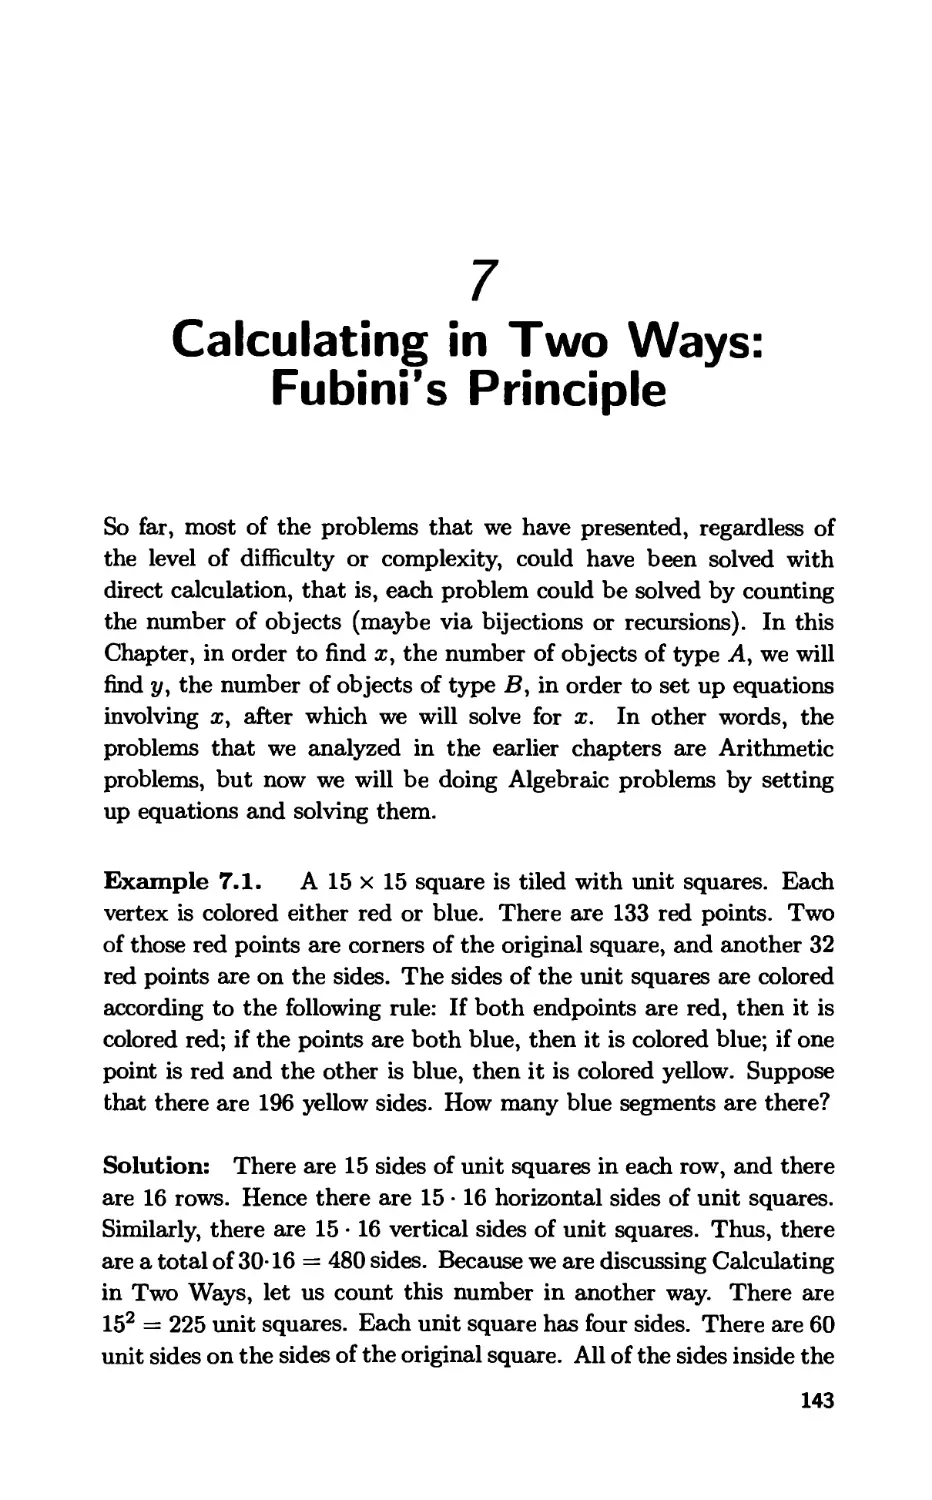 7. Calculating in Two Ways: Fubini's Principle